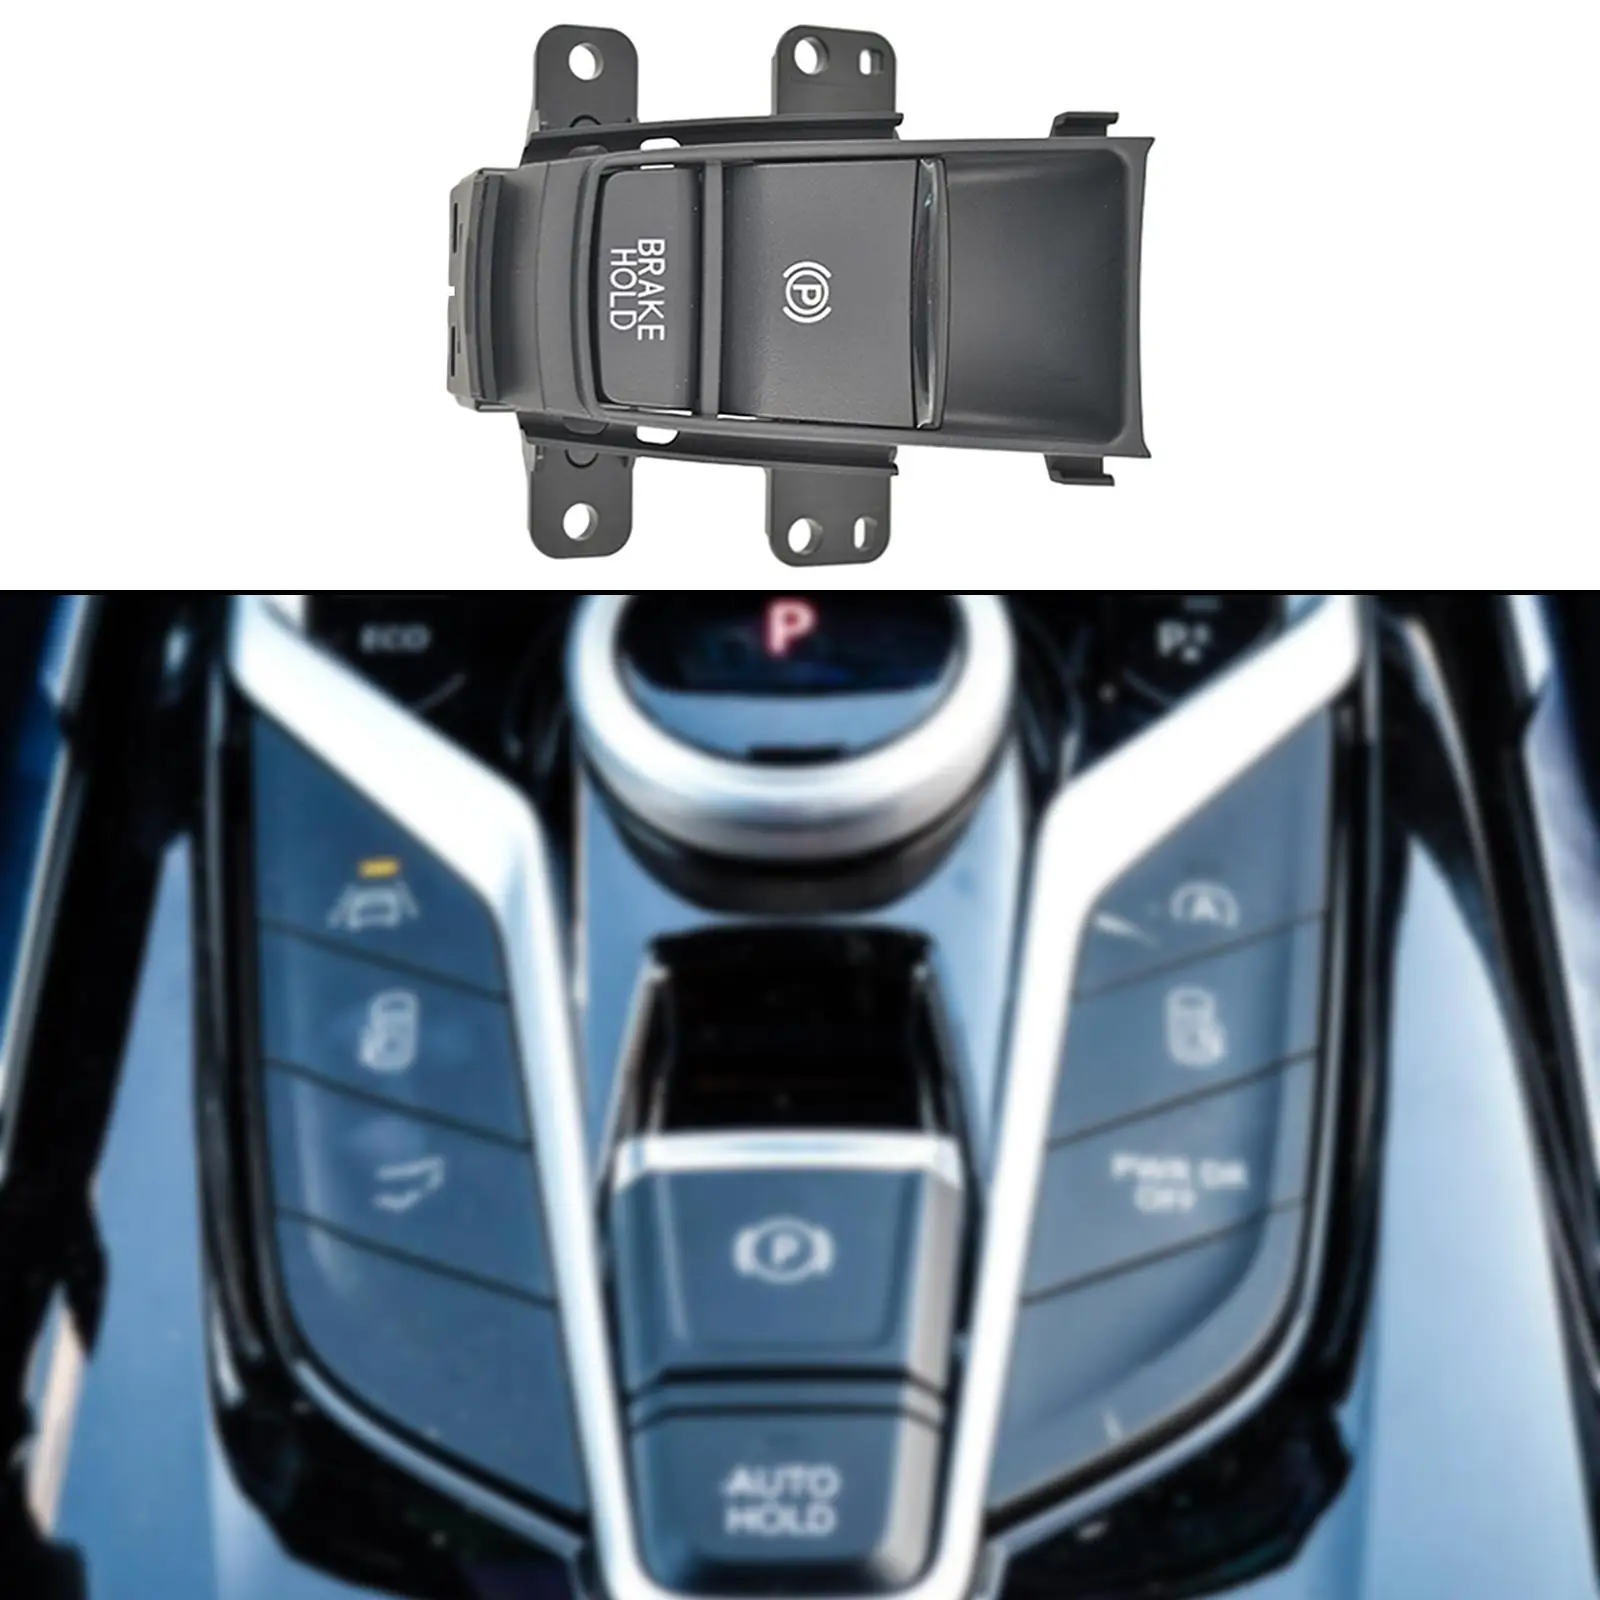 

Электронные аксессуары для автомобиля, аксессуары для автомобиля 35355T7Aj0, модель 2015-2020